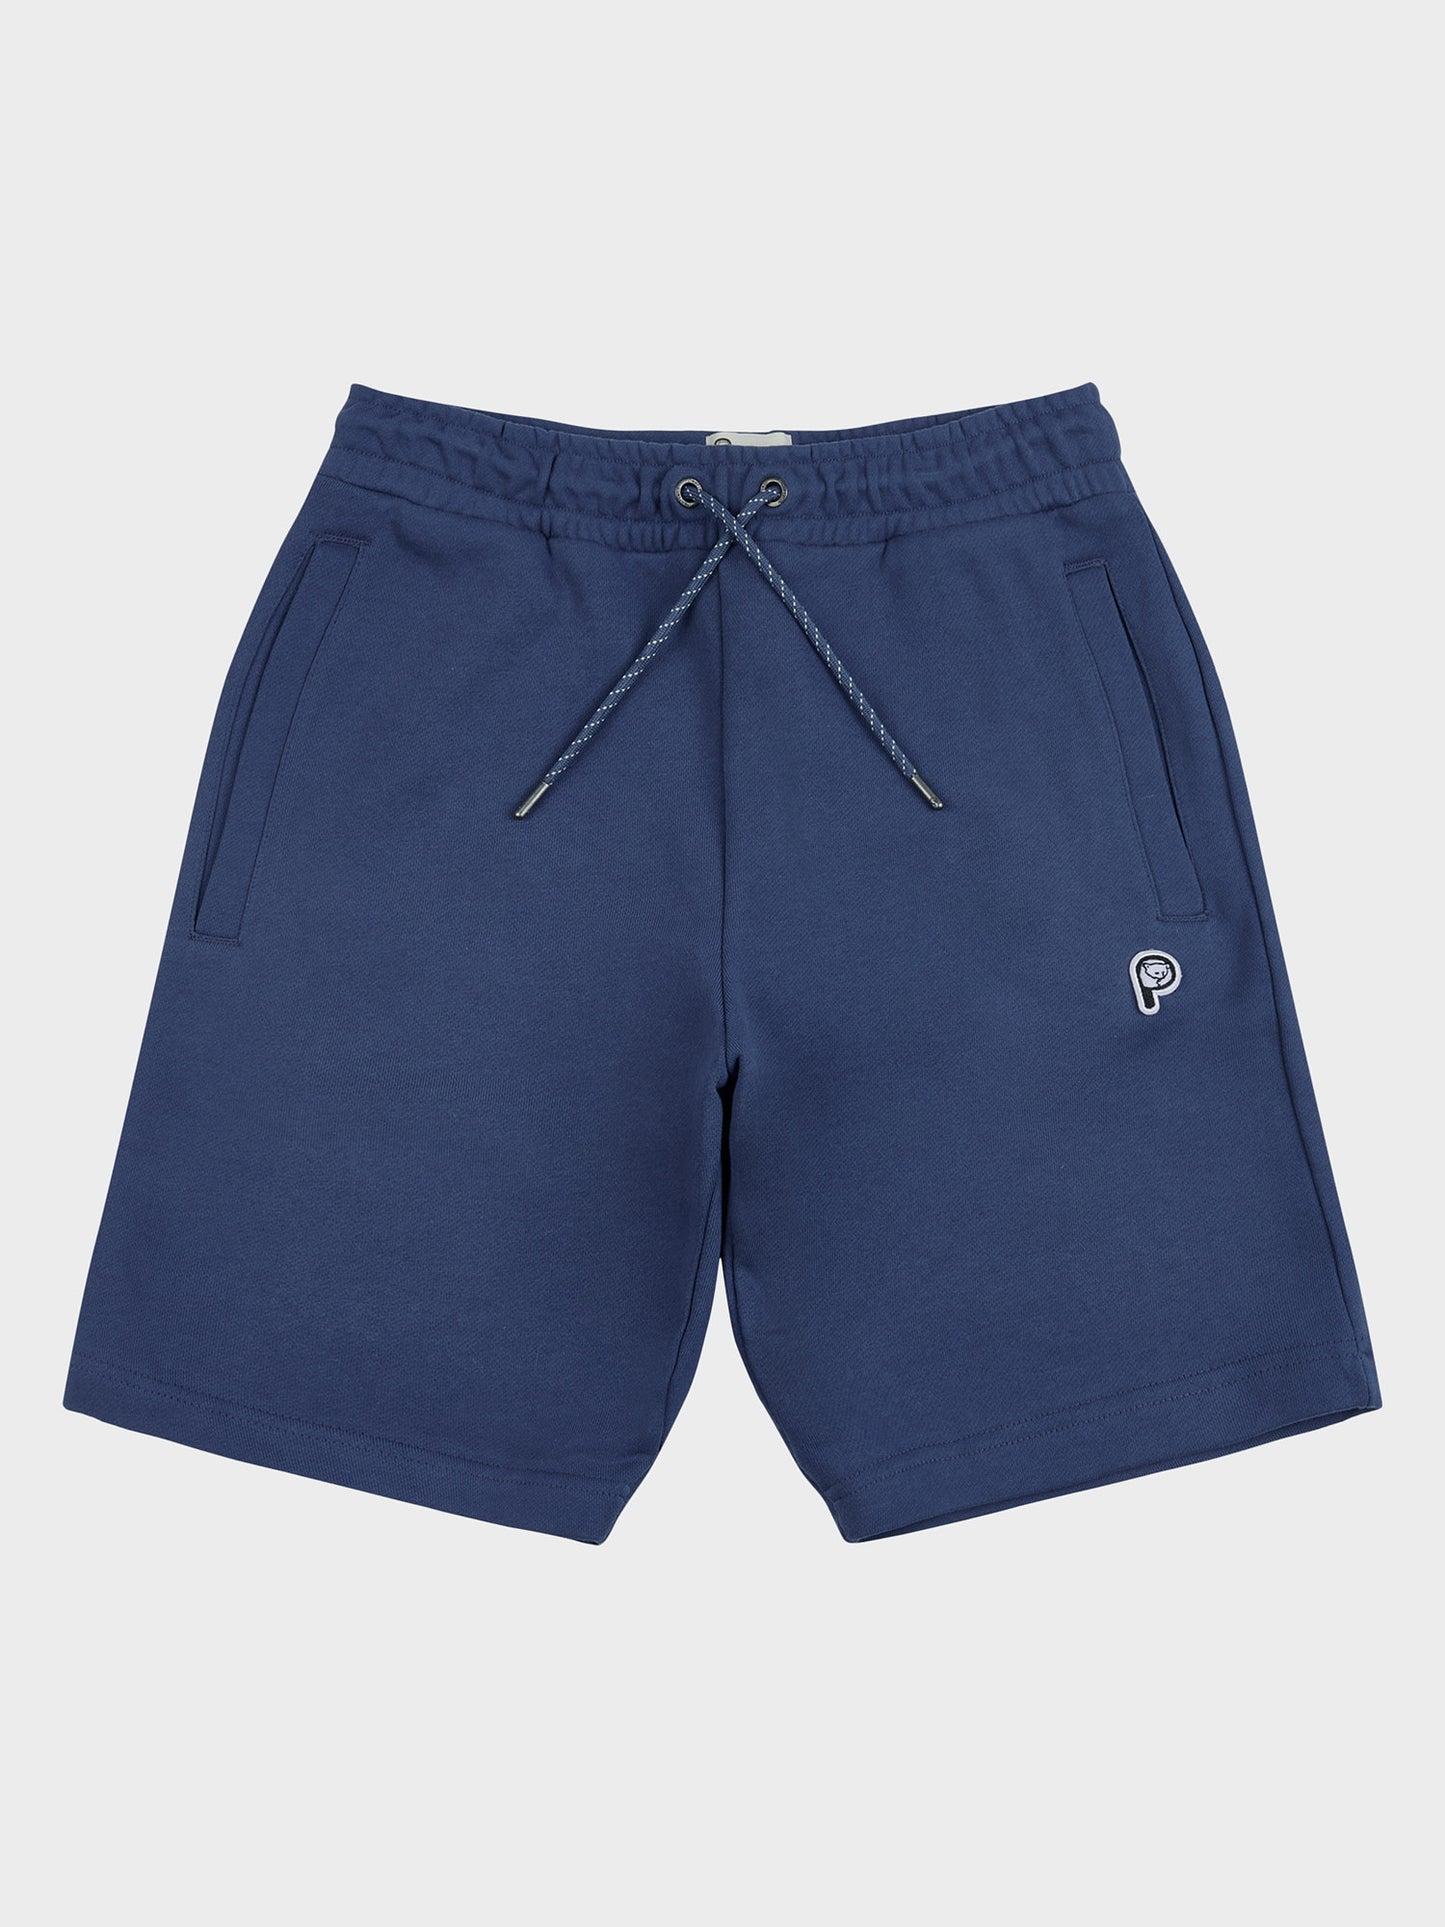 P Bear Sweat Shorts in Vintage Indigo